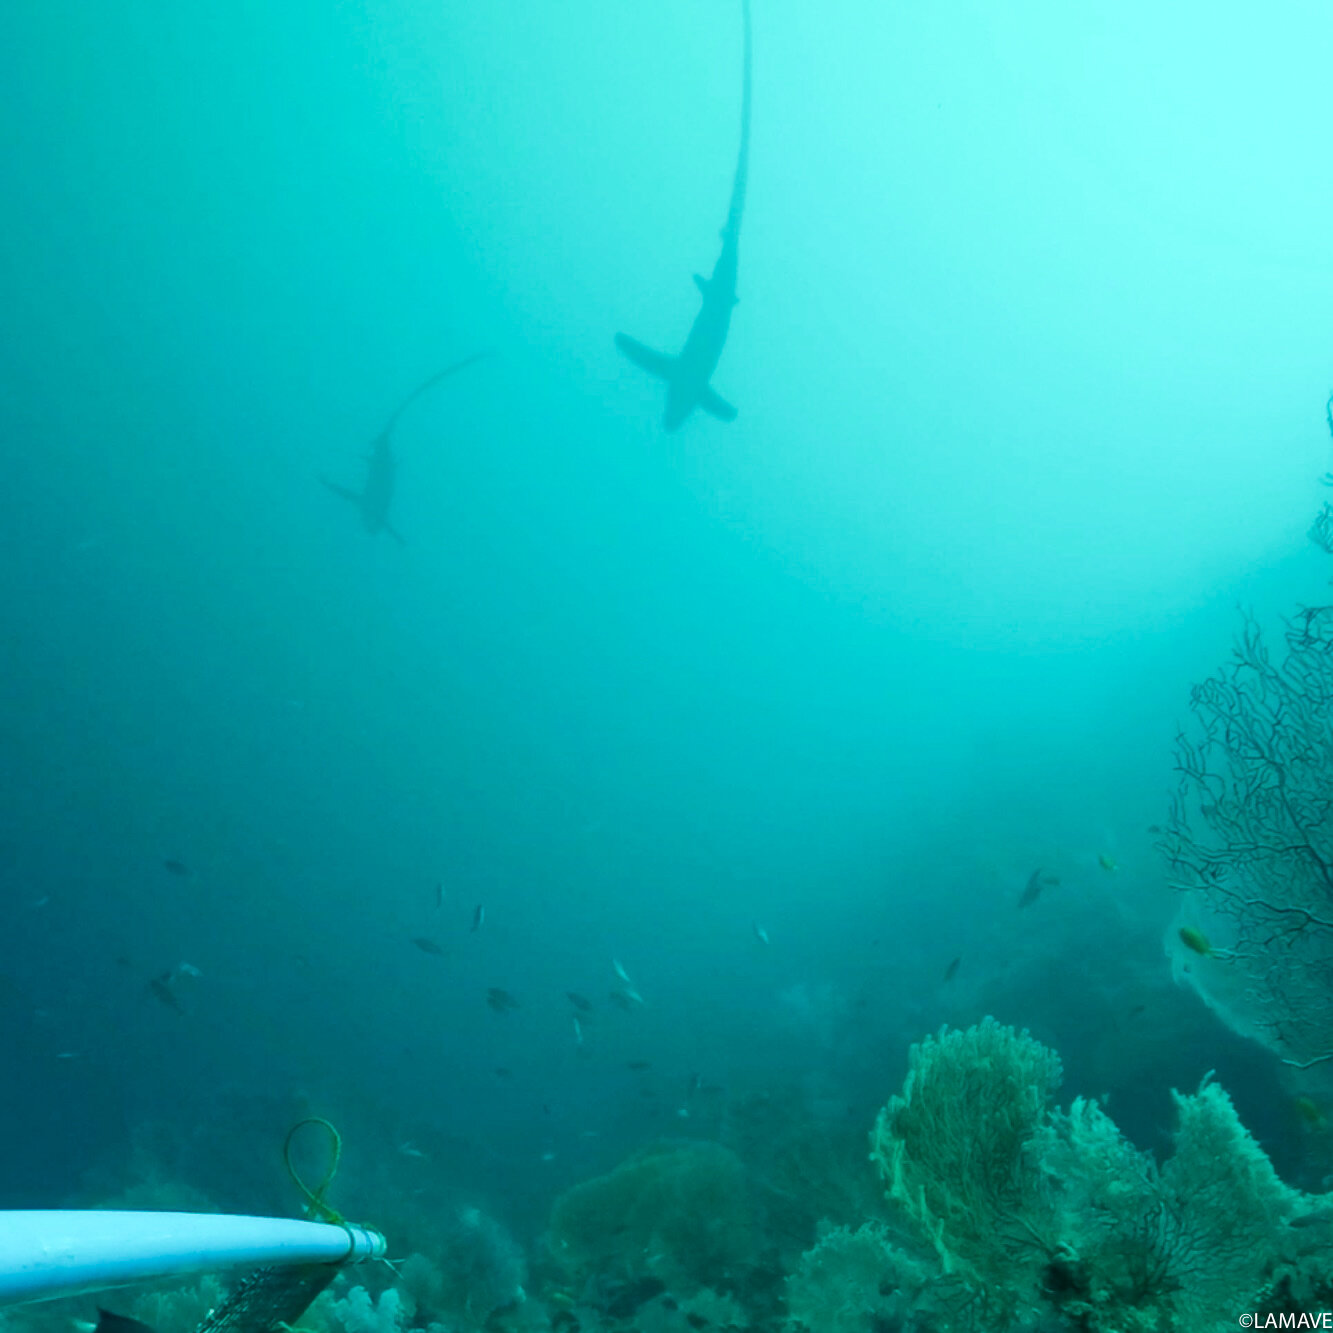 thresher sharks captured on a baited remote underwater video (BRUV) system